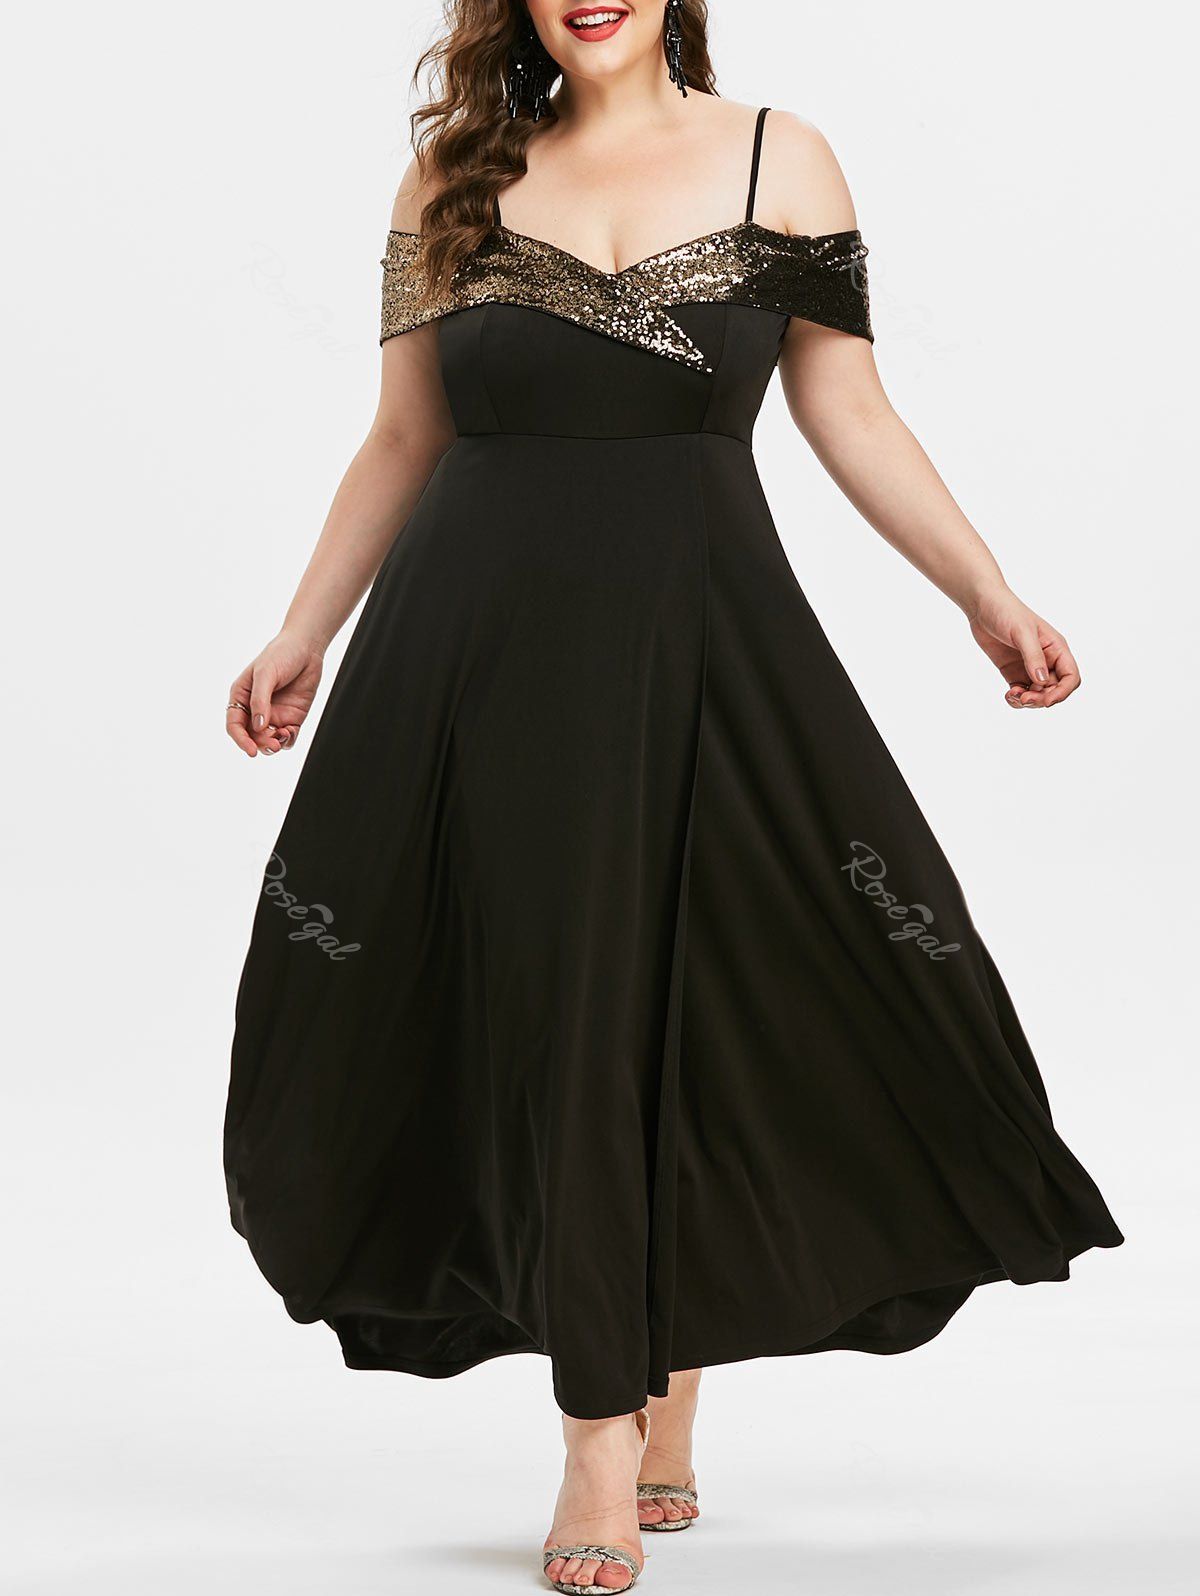 size 26 prom dress